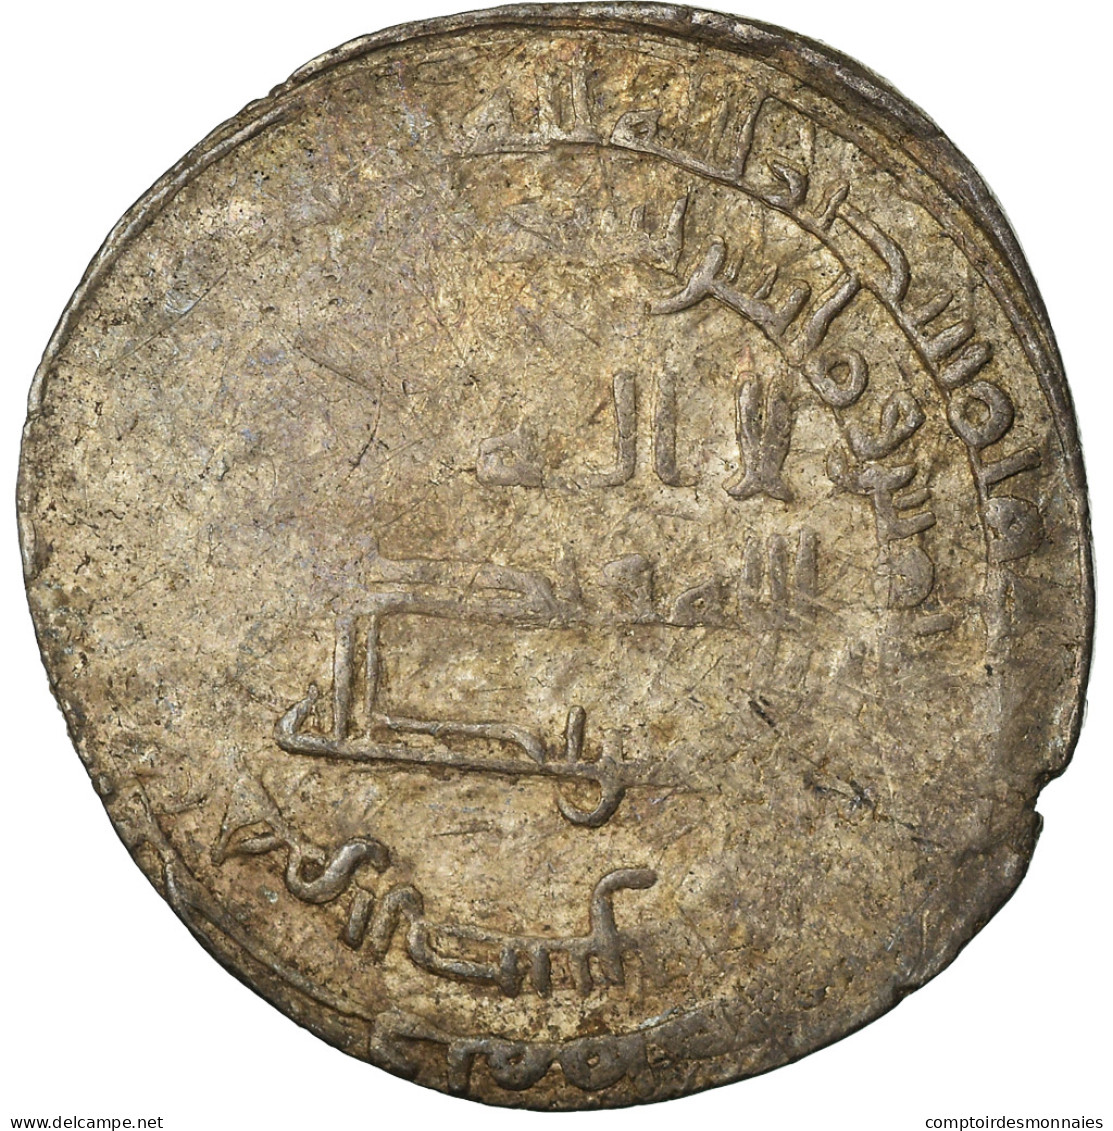 Monnaie, Abbasid Caliphate, Al-Mu'tadid, Dirham, AH 285 (896/897), Nasibin, TB+ - Islamic